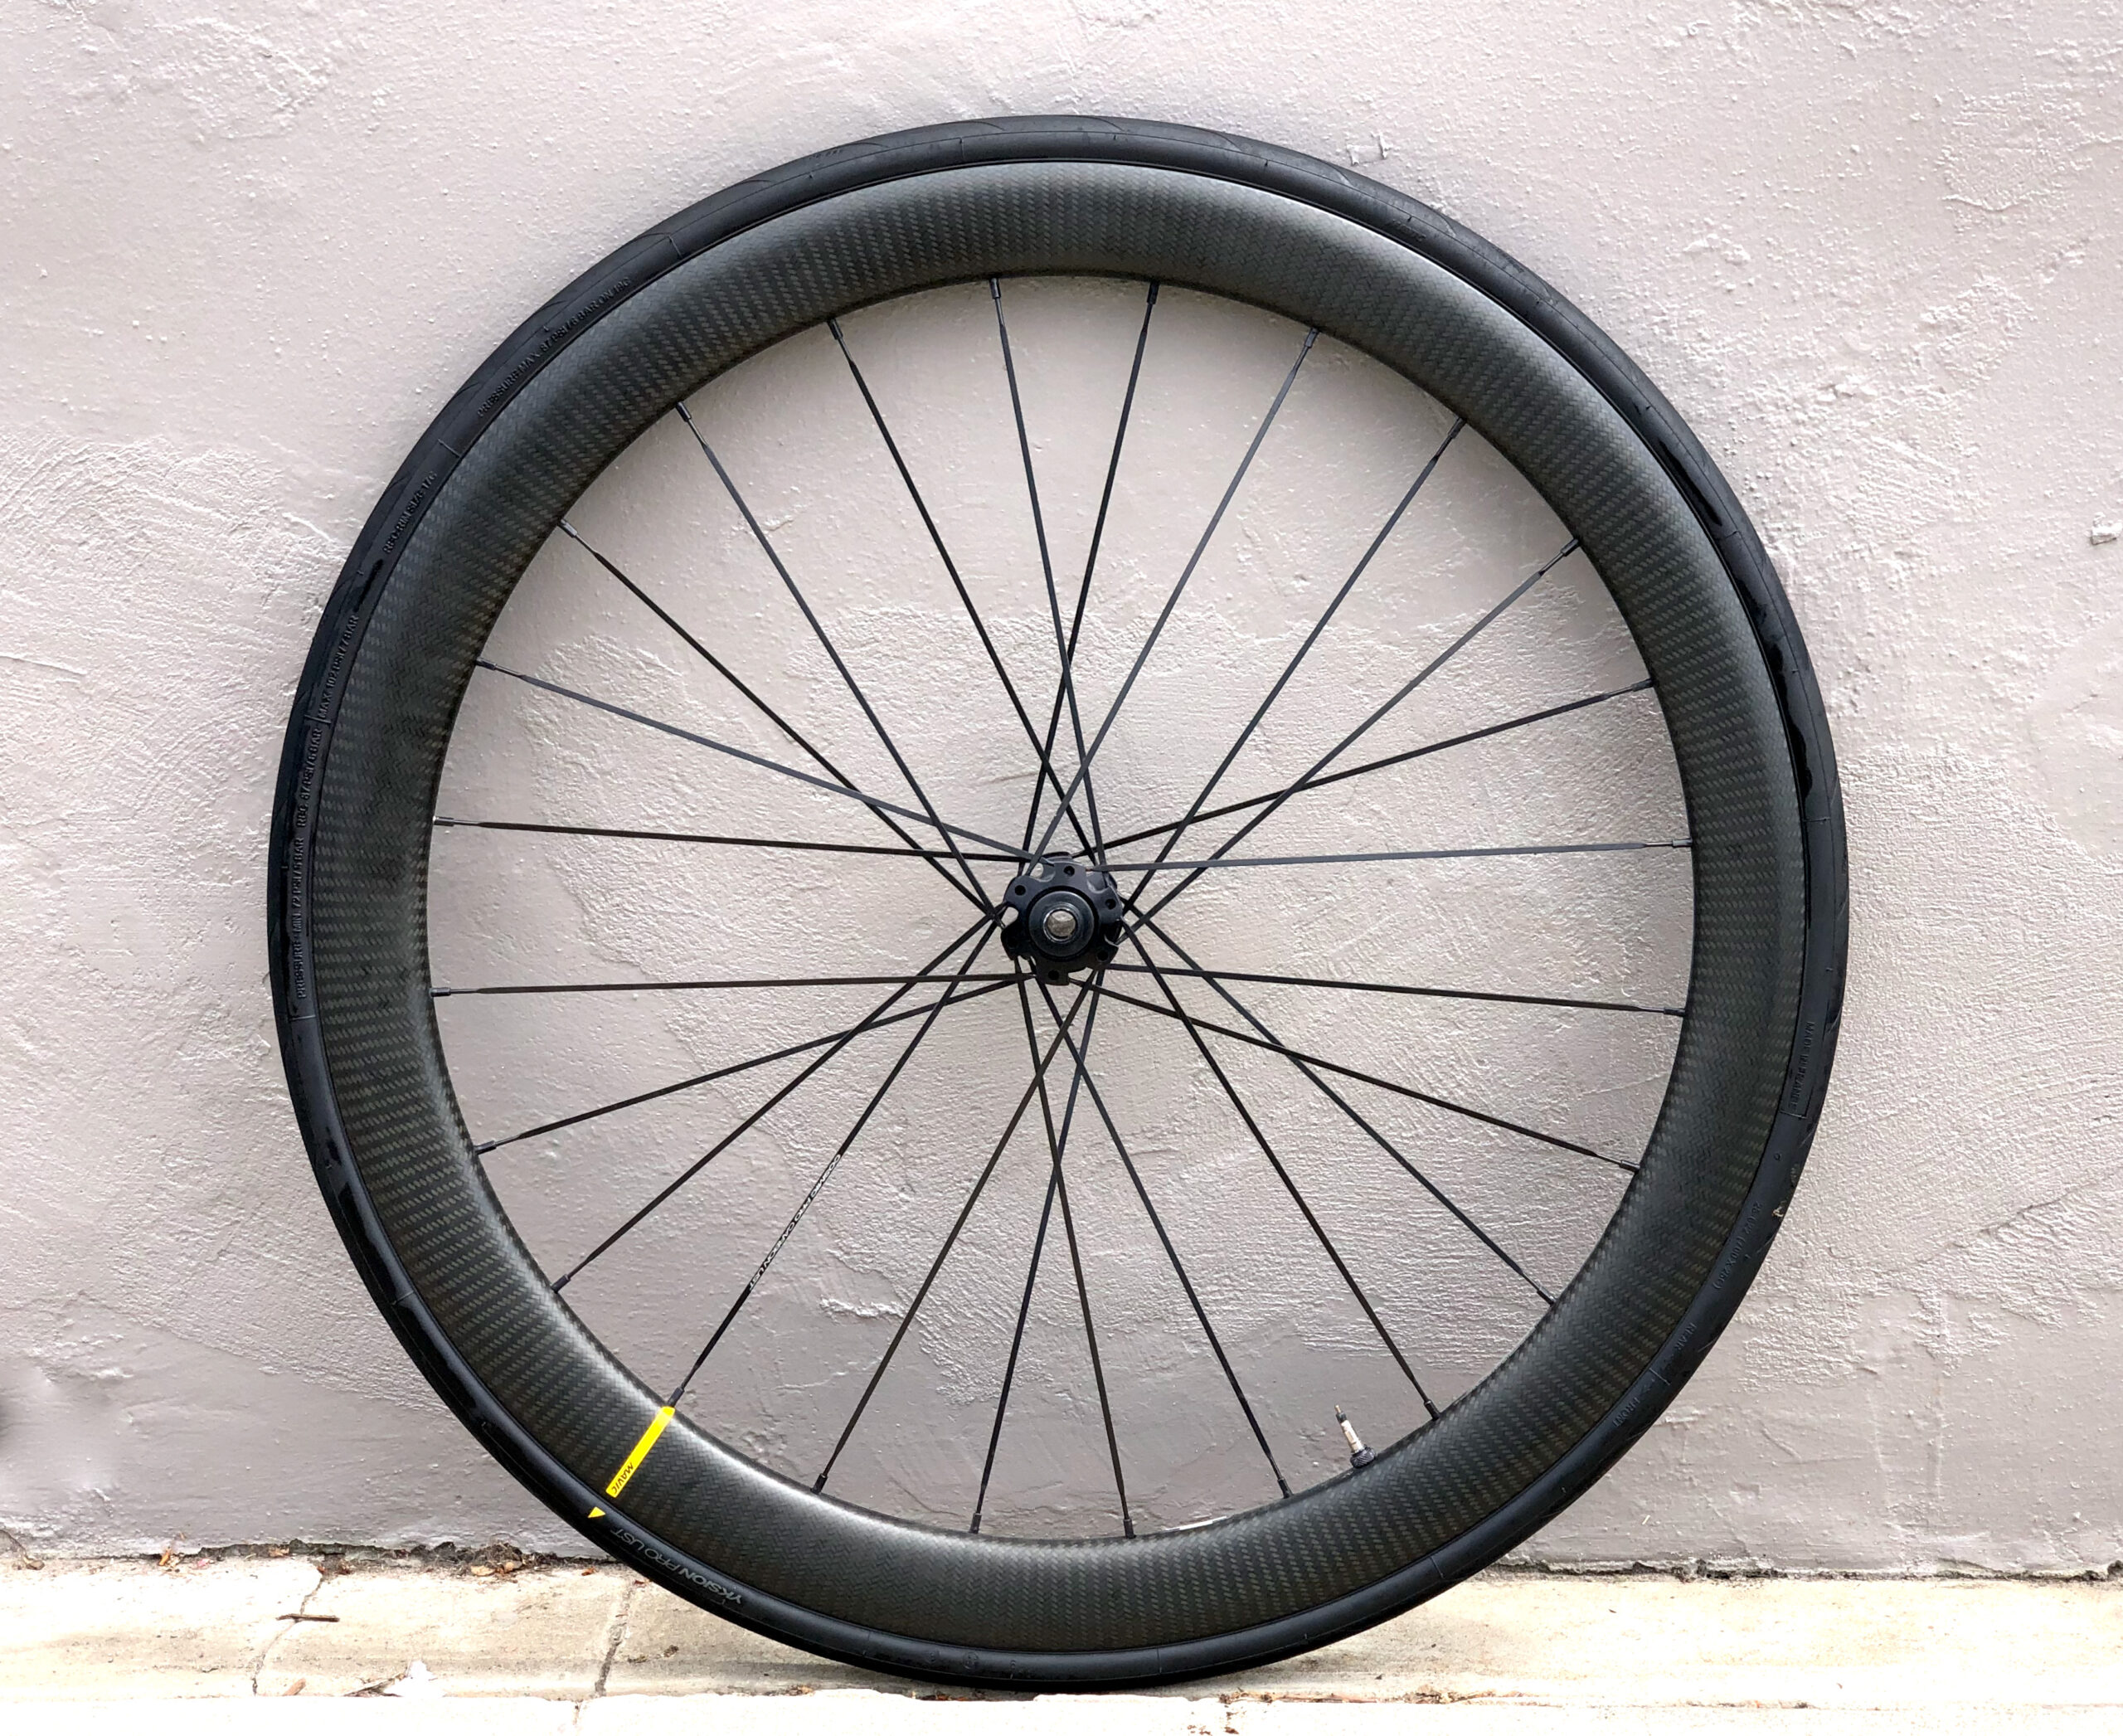 Mavic Cosmic Pro Carbon SL UST Tubeless Disc Front Road Bike Wheel Thru Axle